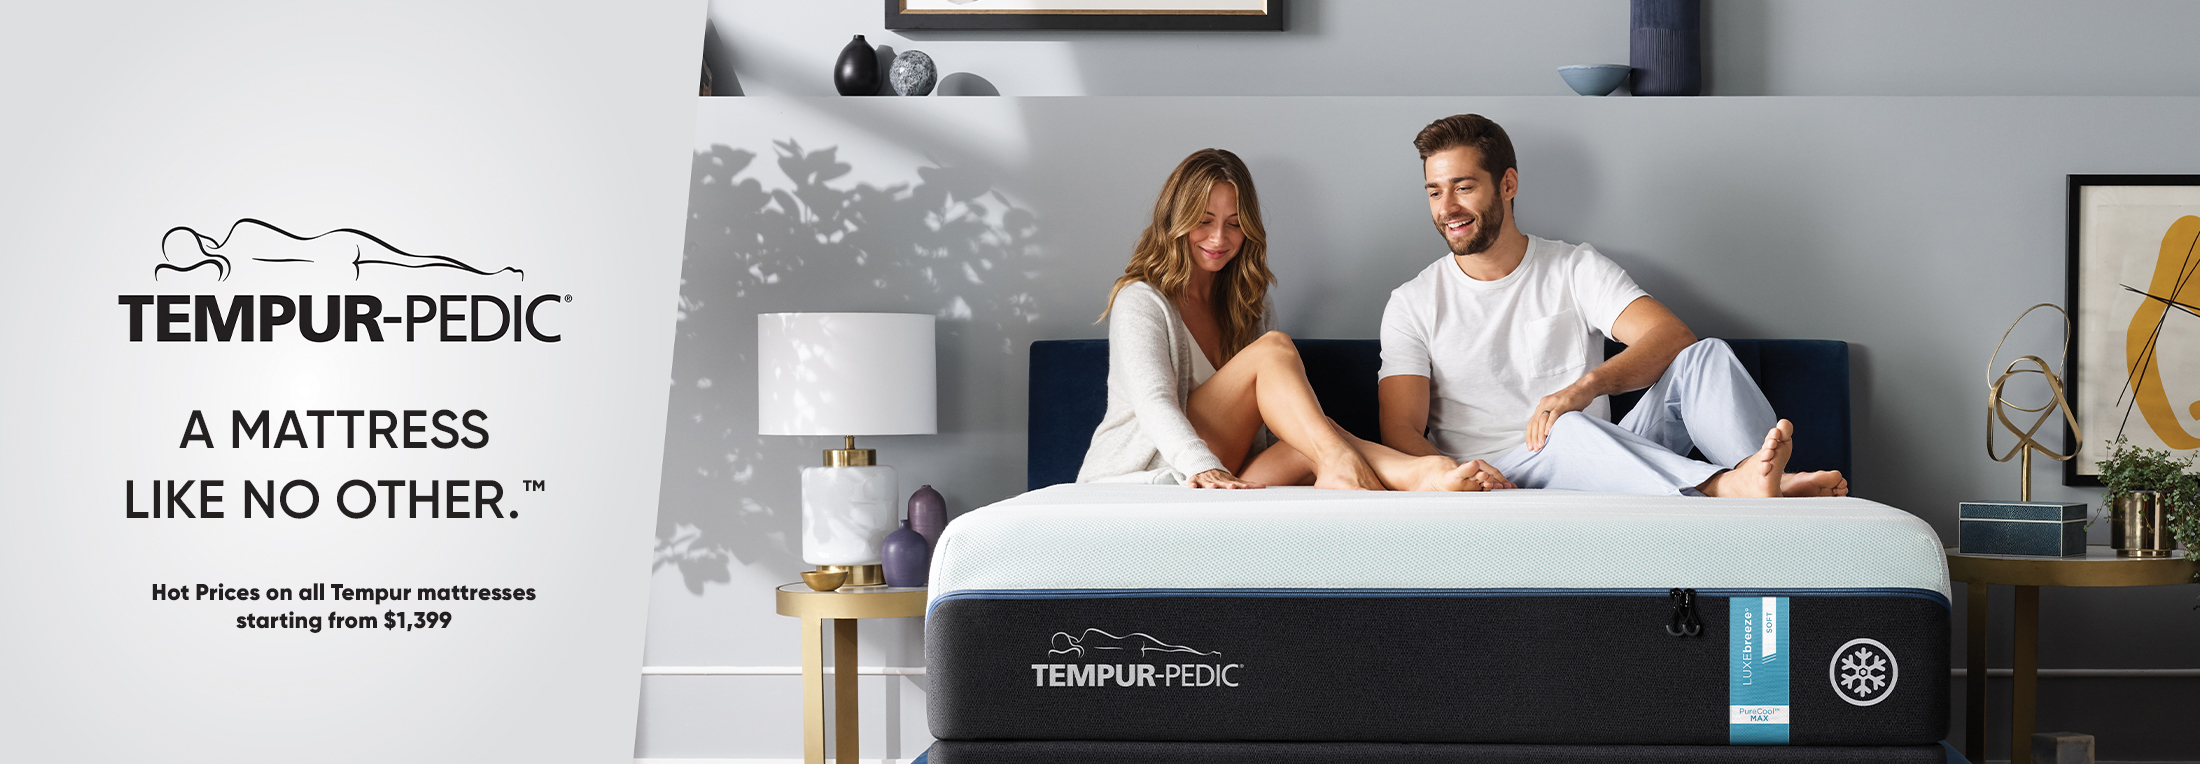 price of tempurpedic mattress in canada